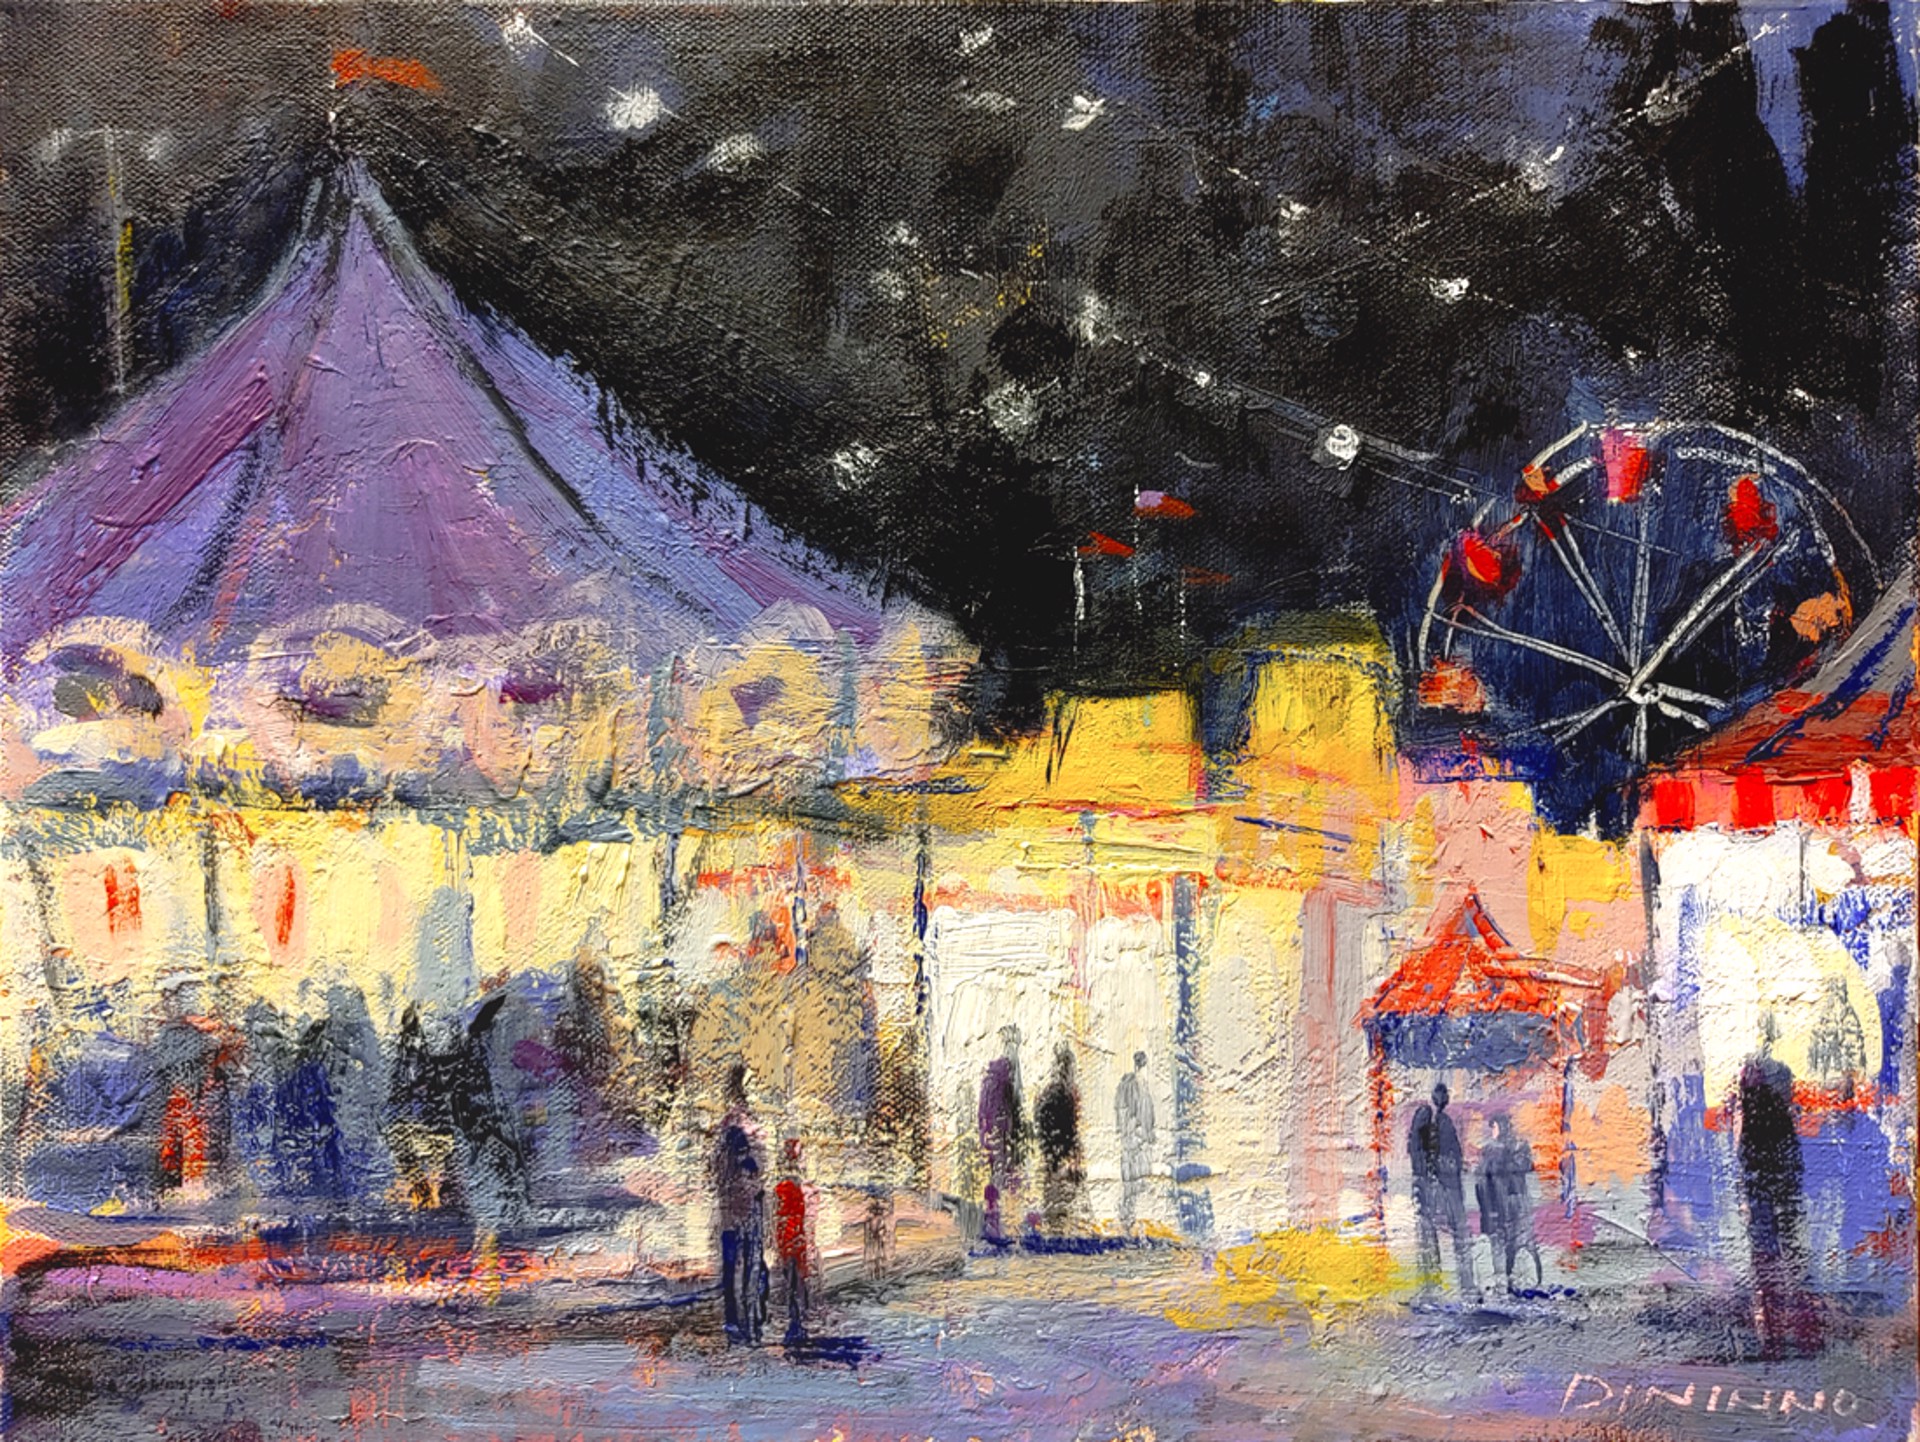 Carousel & Ferris Wheel by Steve Dininno